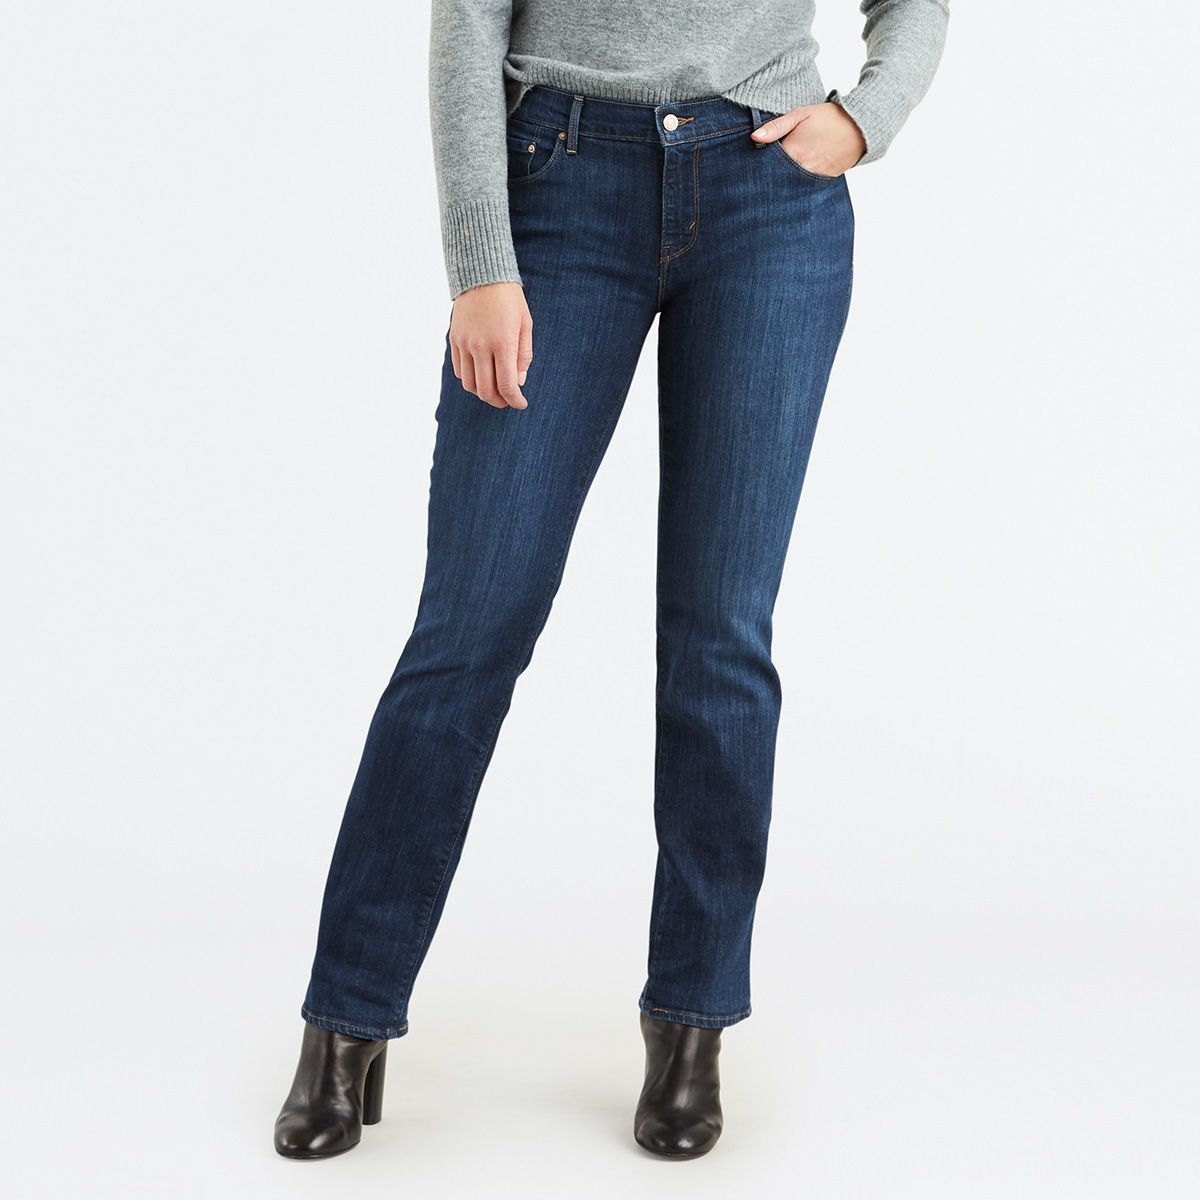 Womens Levis Jeans & Denim Apparel - Macy's